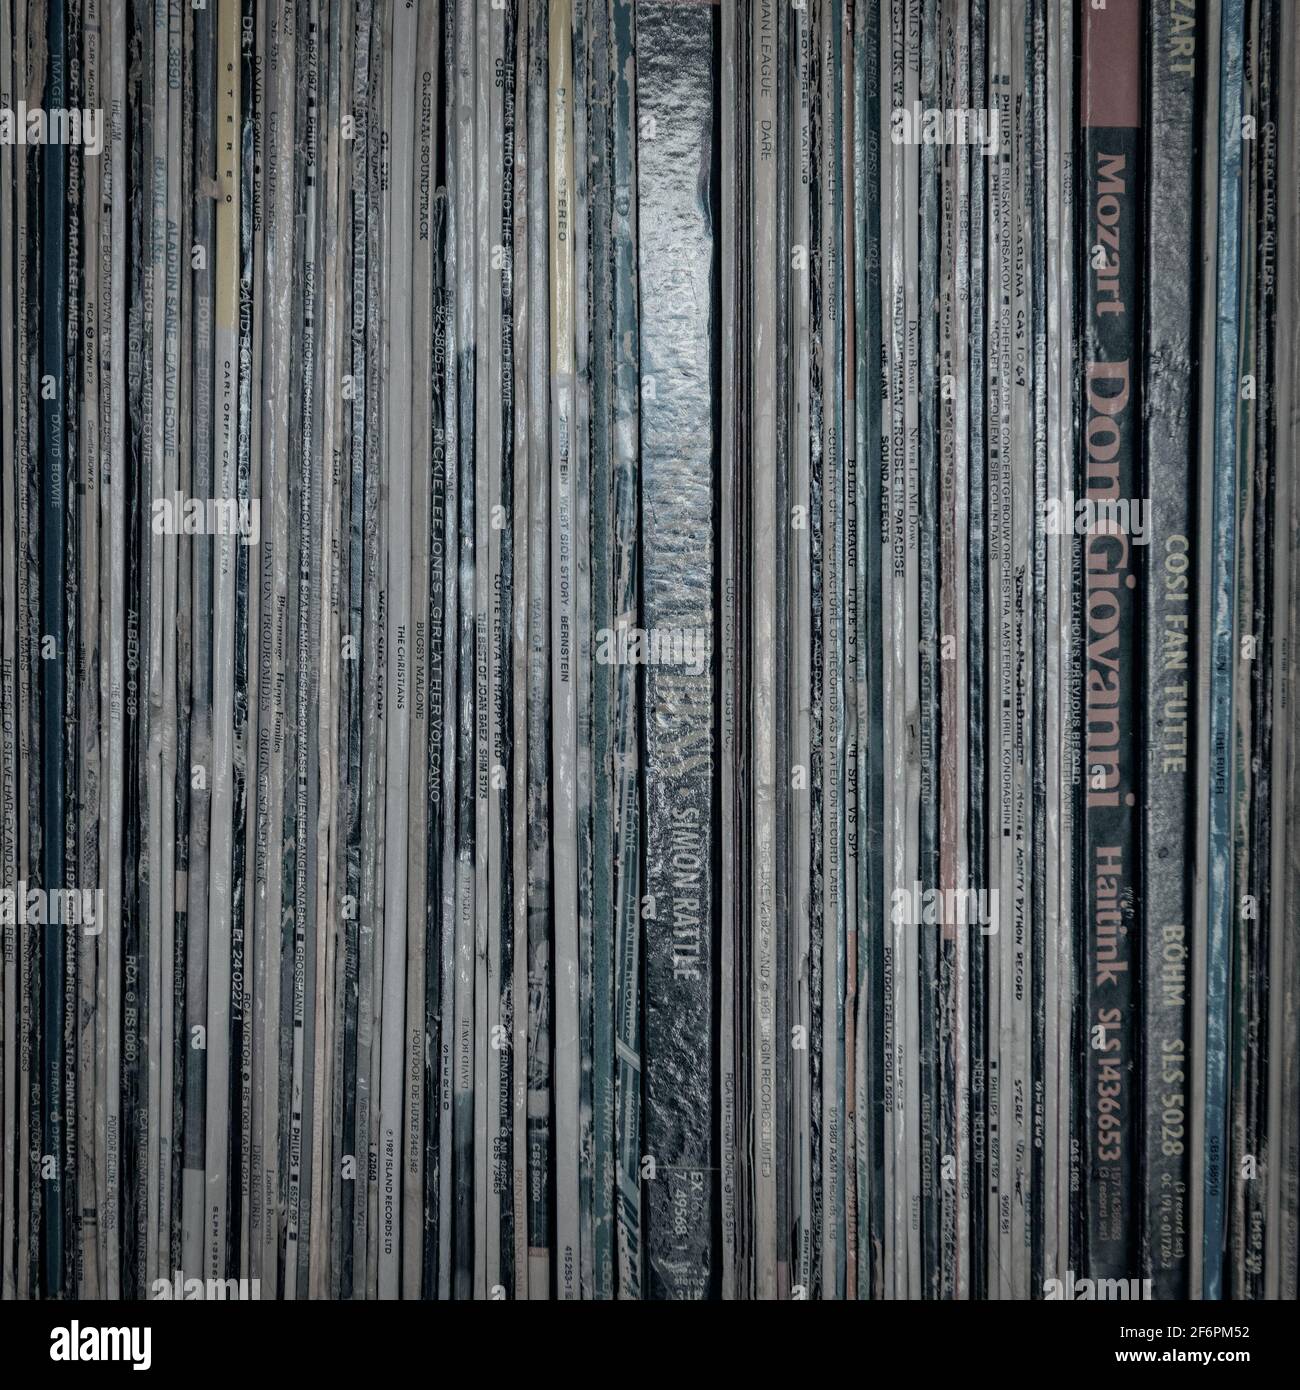 Espinas de varias mangas LP. Foto de stock